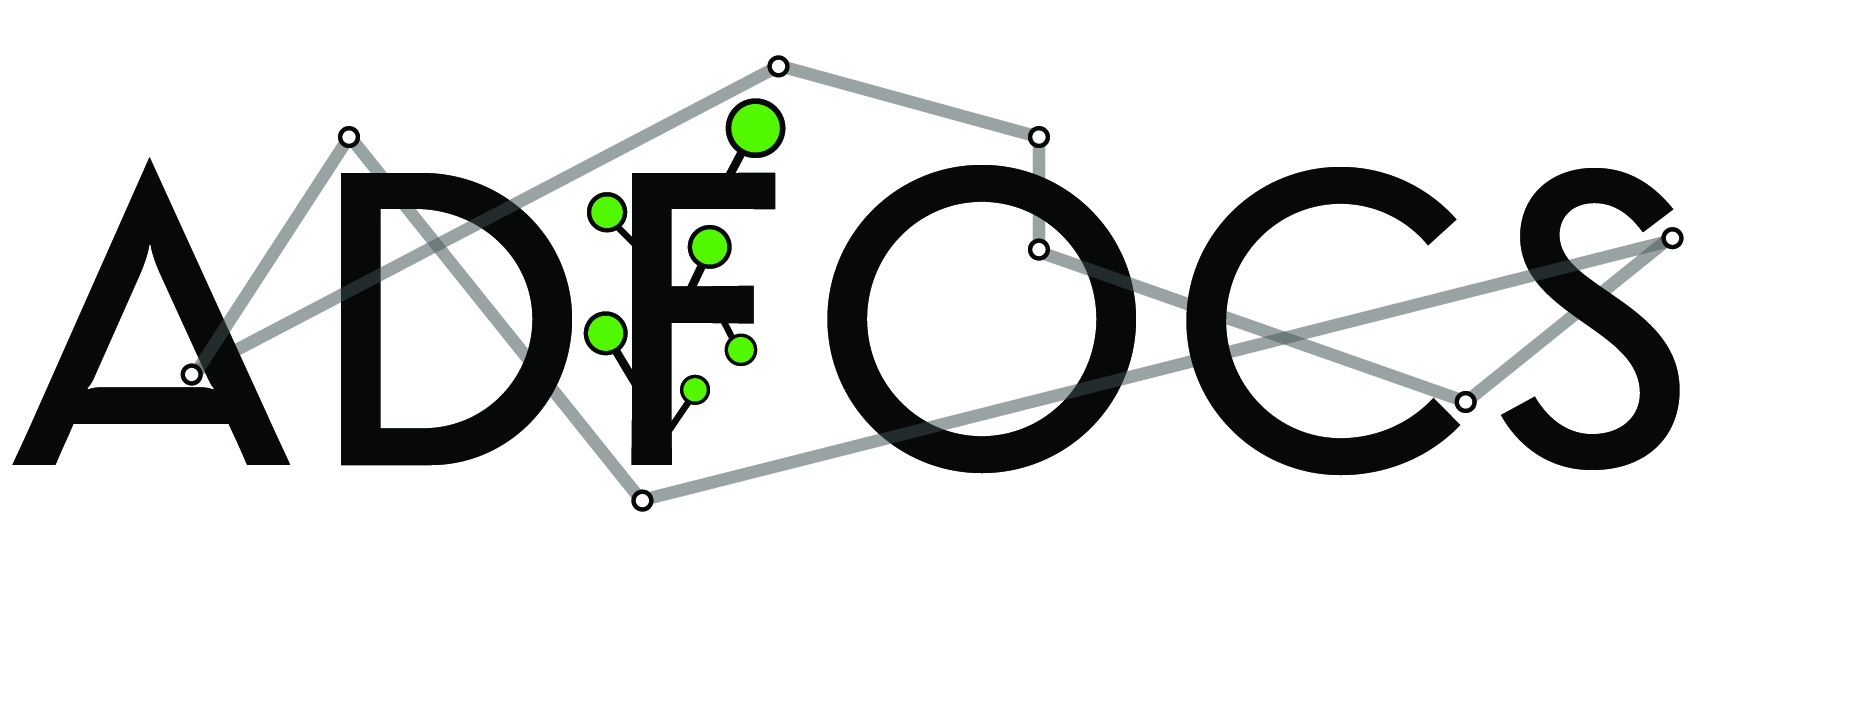 ADFOCS 2015 Logo